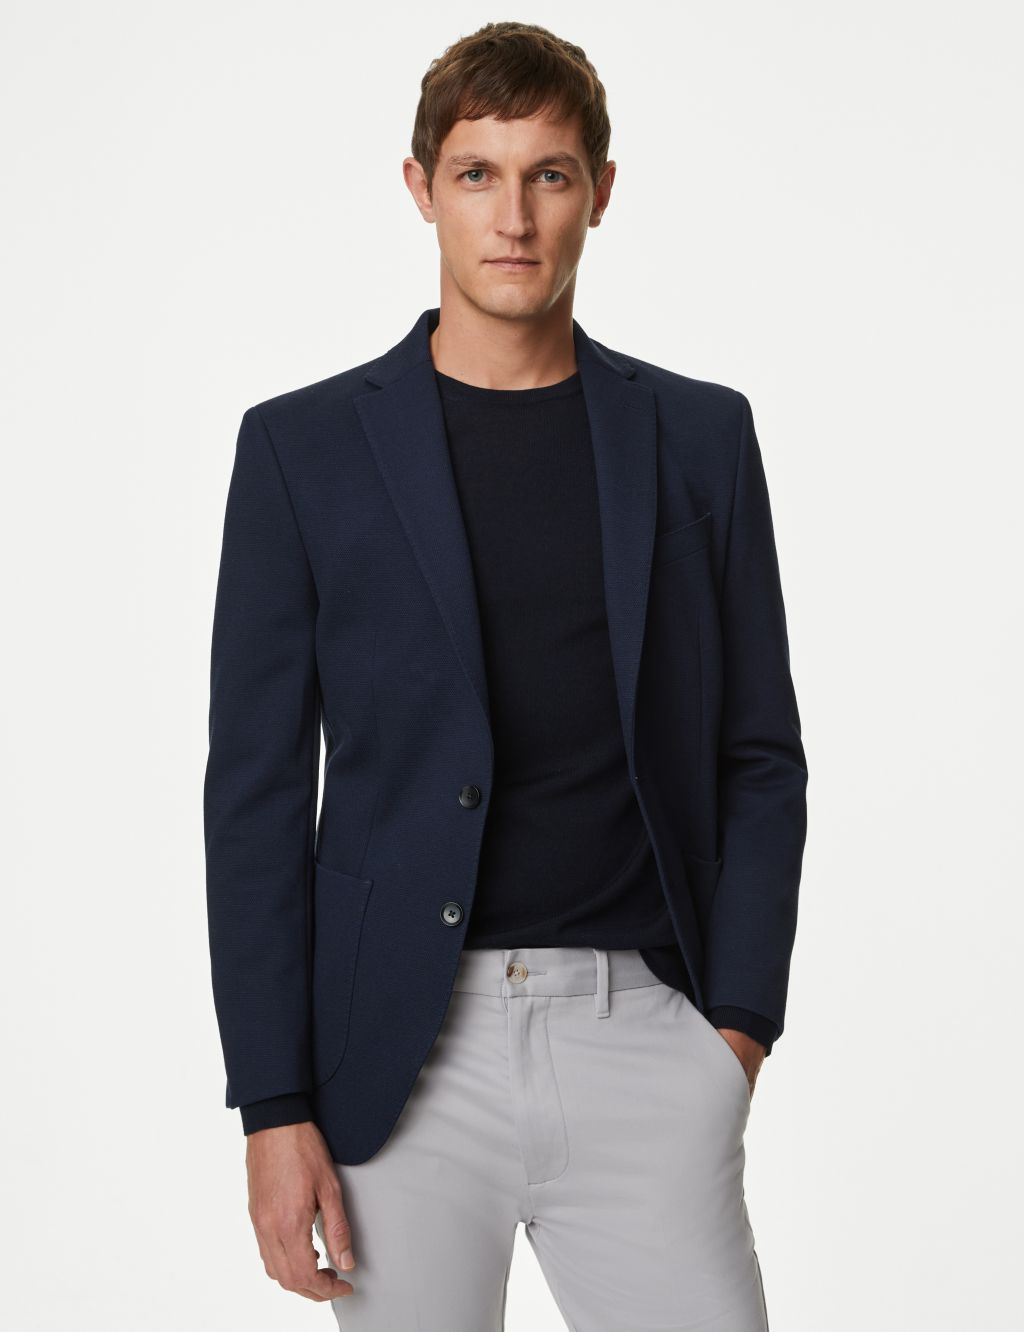 Men's Blazer Jackets: Formal and Casual Blazer for Men